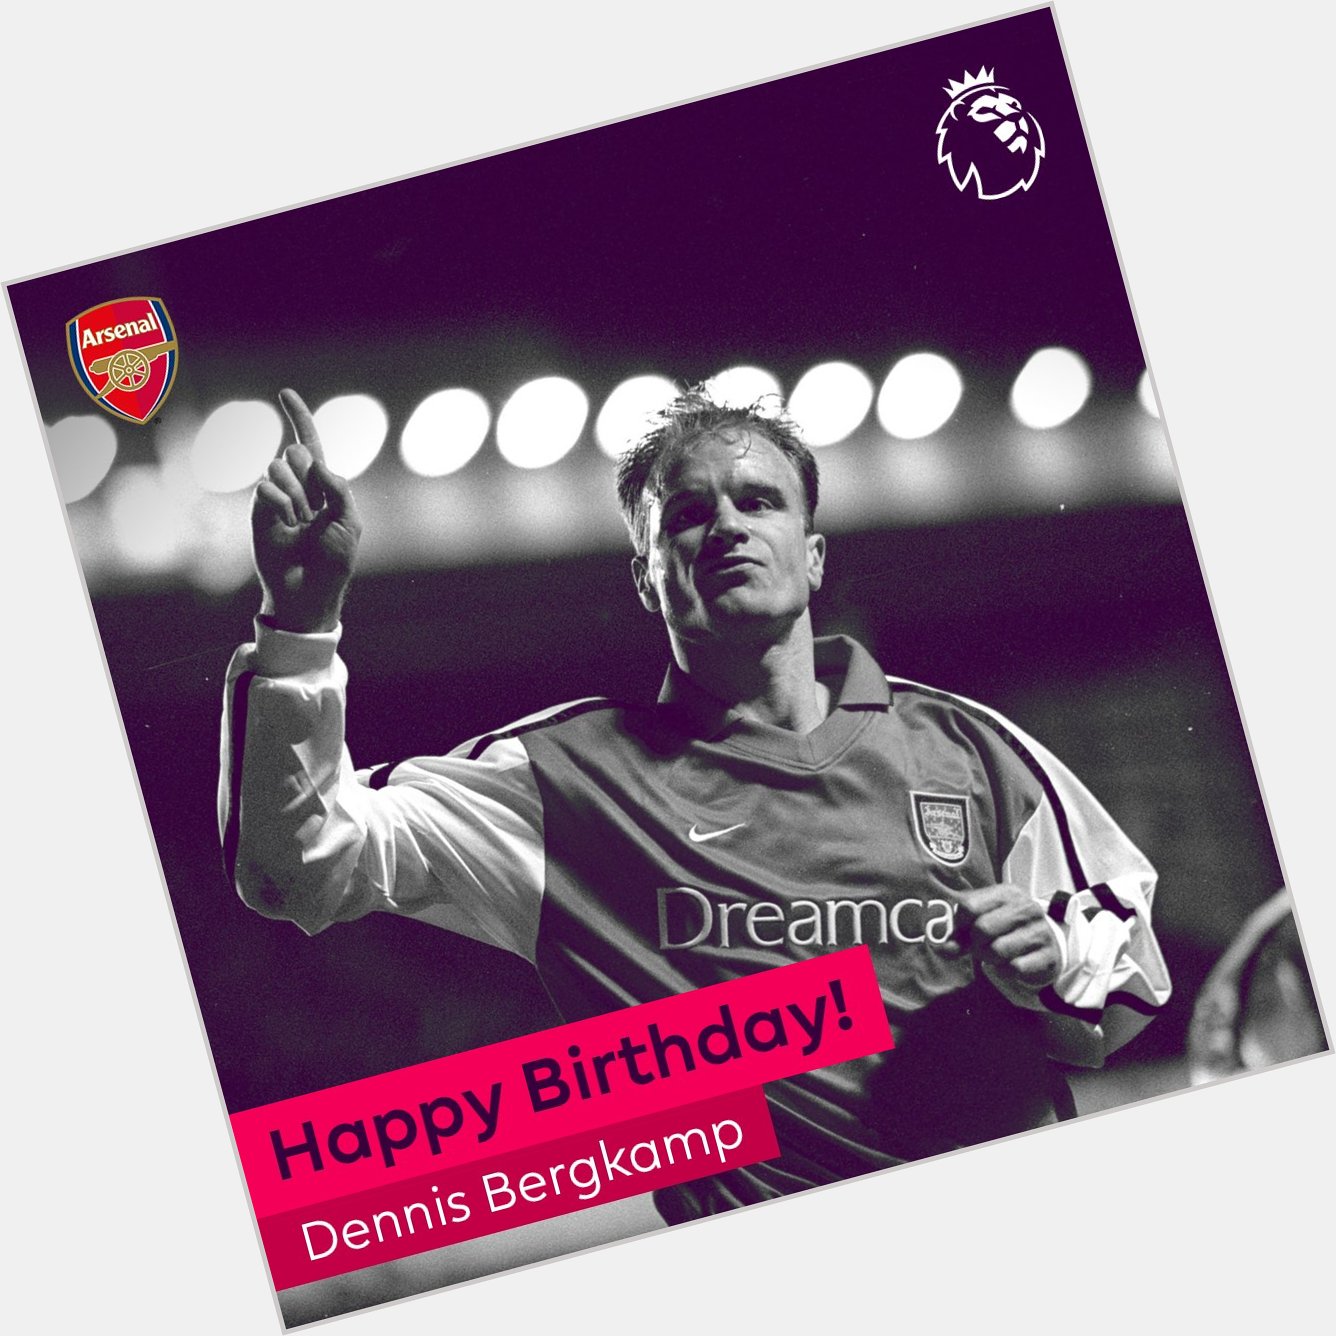 Happy birthday to one of greatest ever, Dennis Bergkamp!   